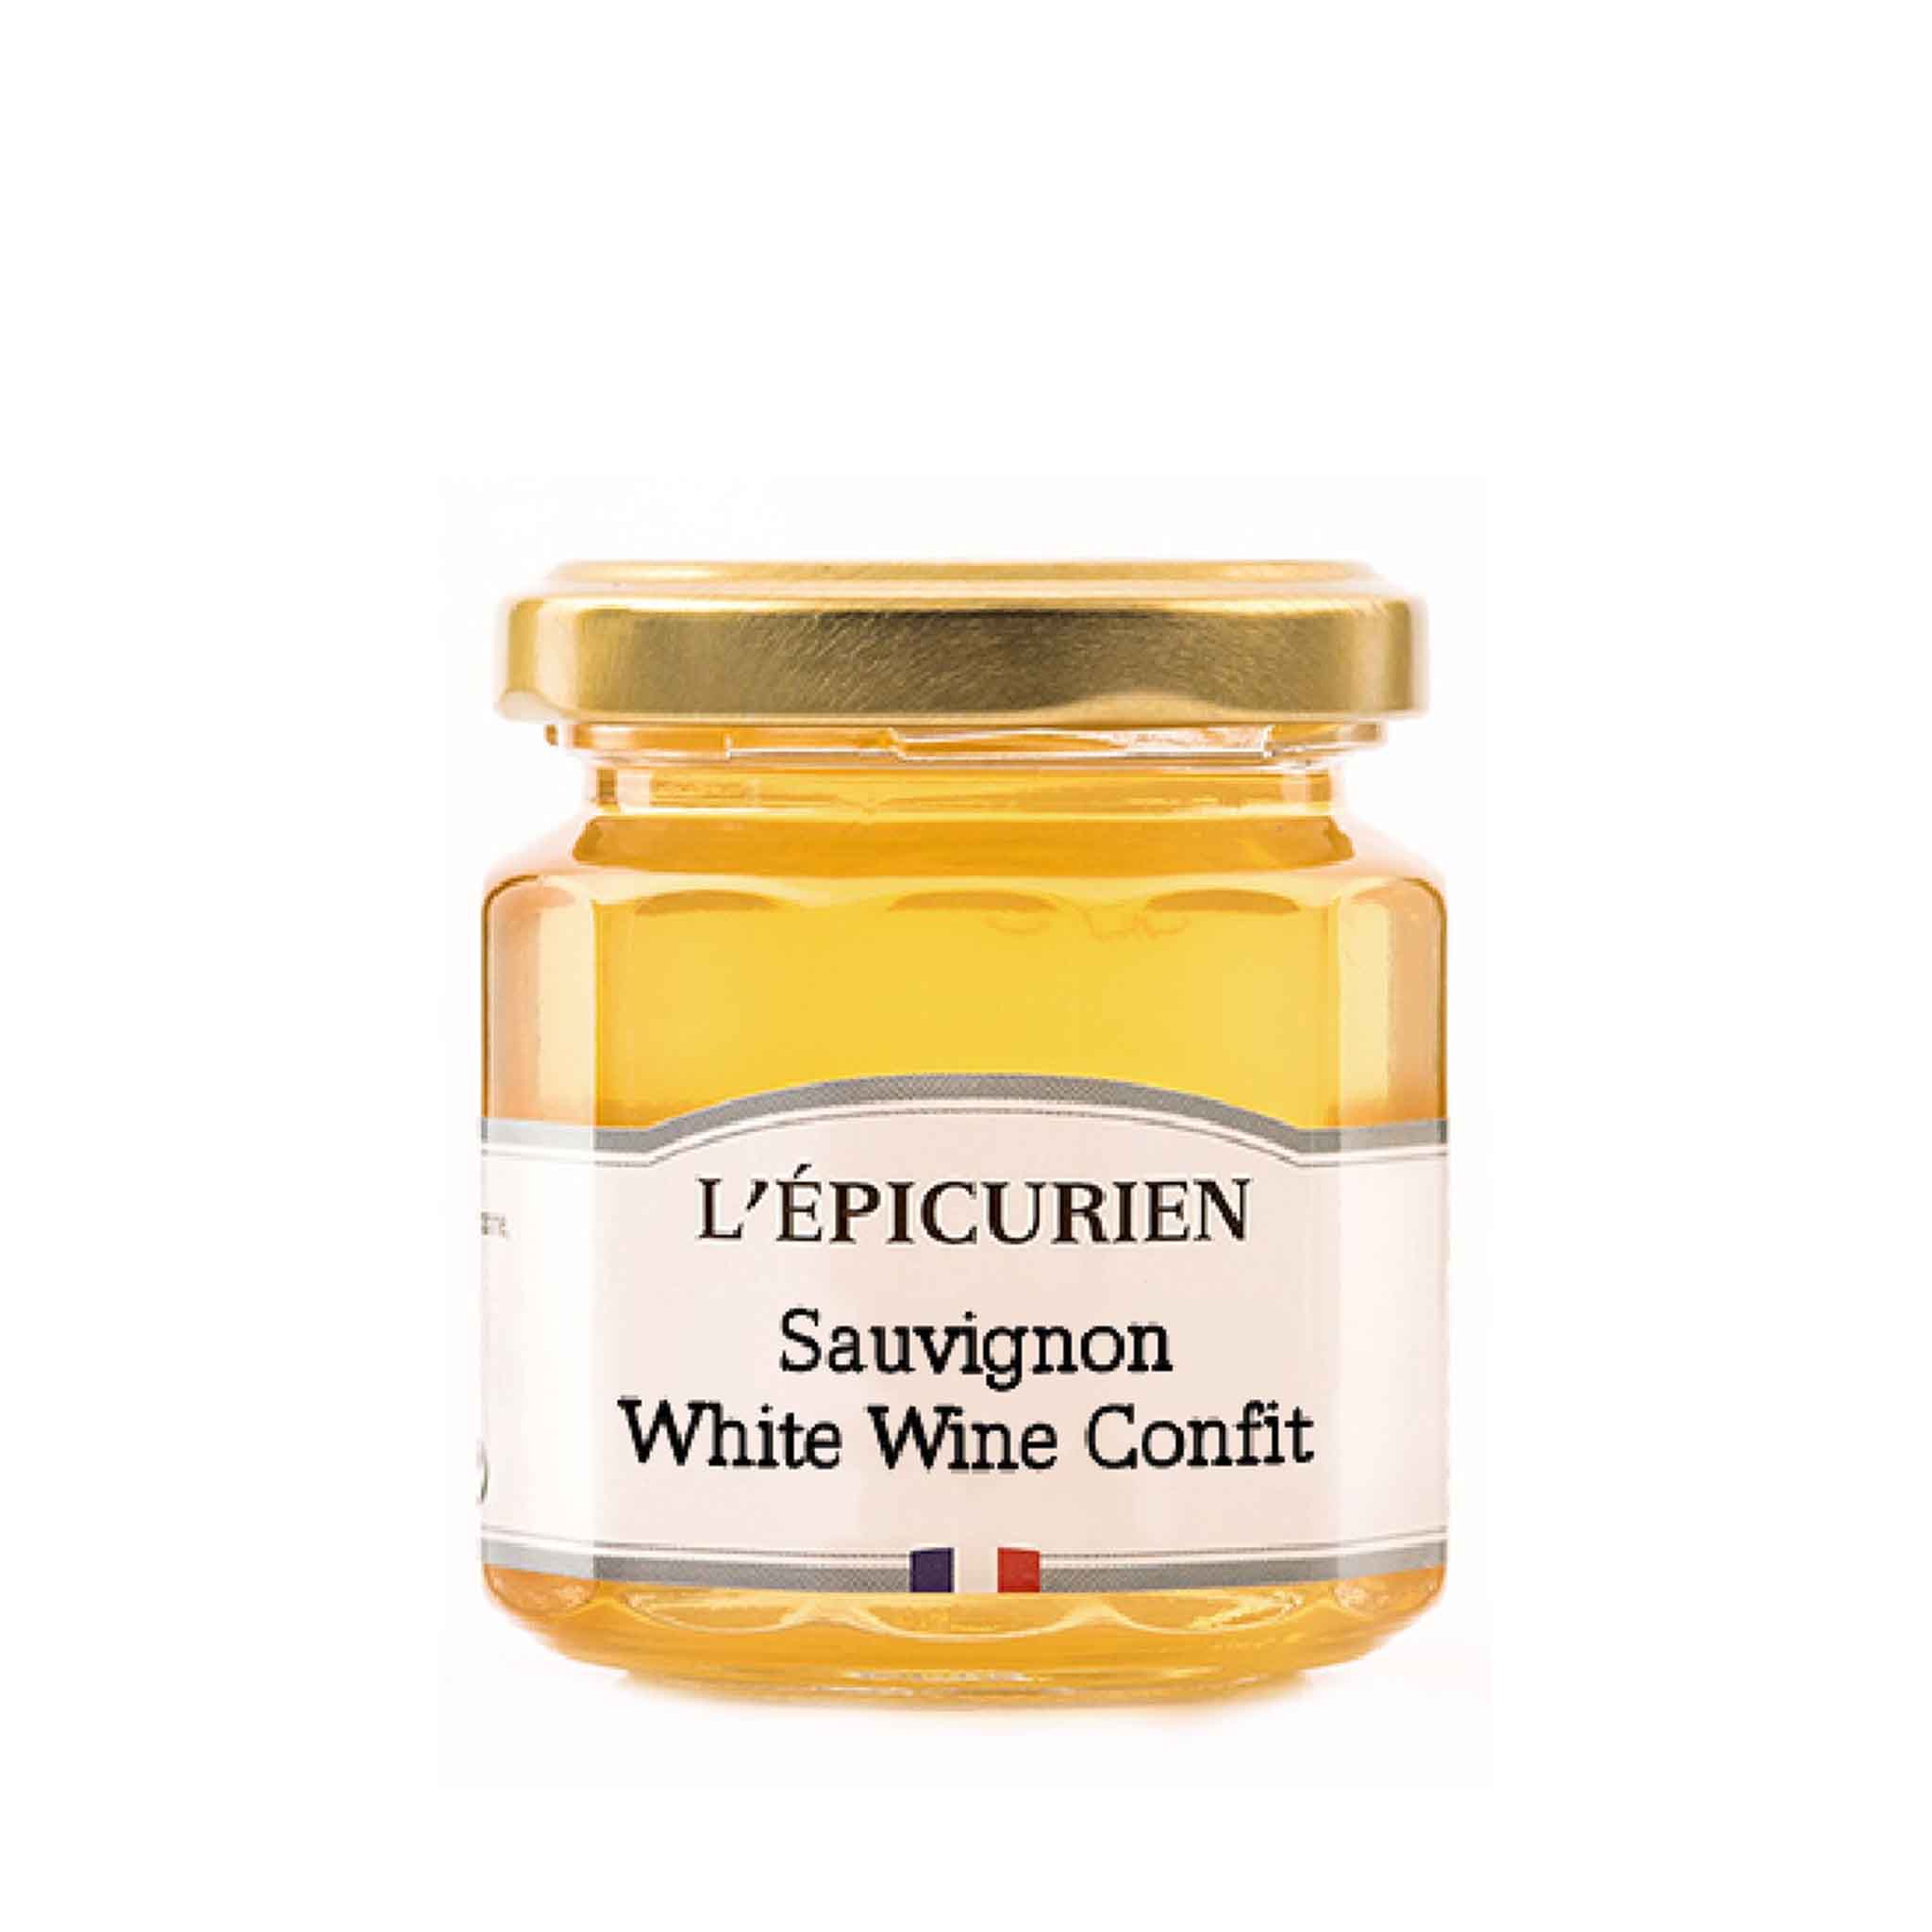 L'EPICURIEN SAUVIGNON WHITE WINE CONFIT 125g